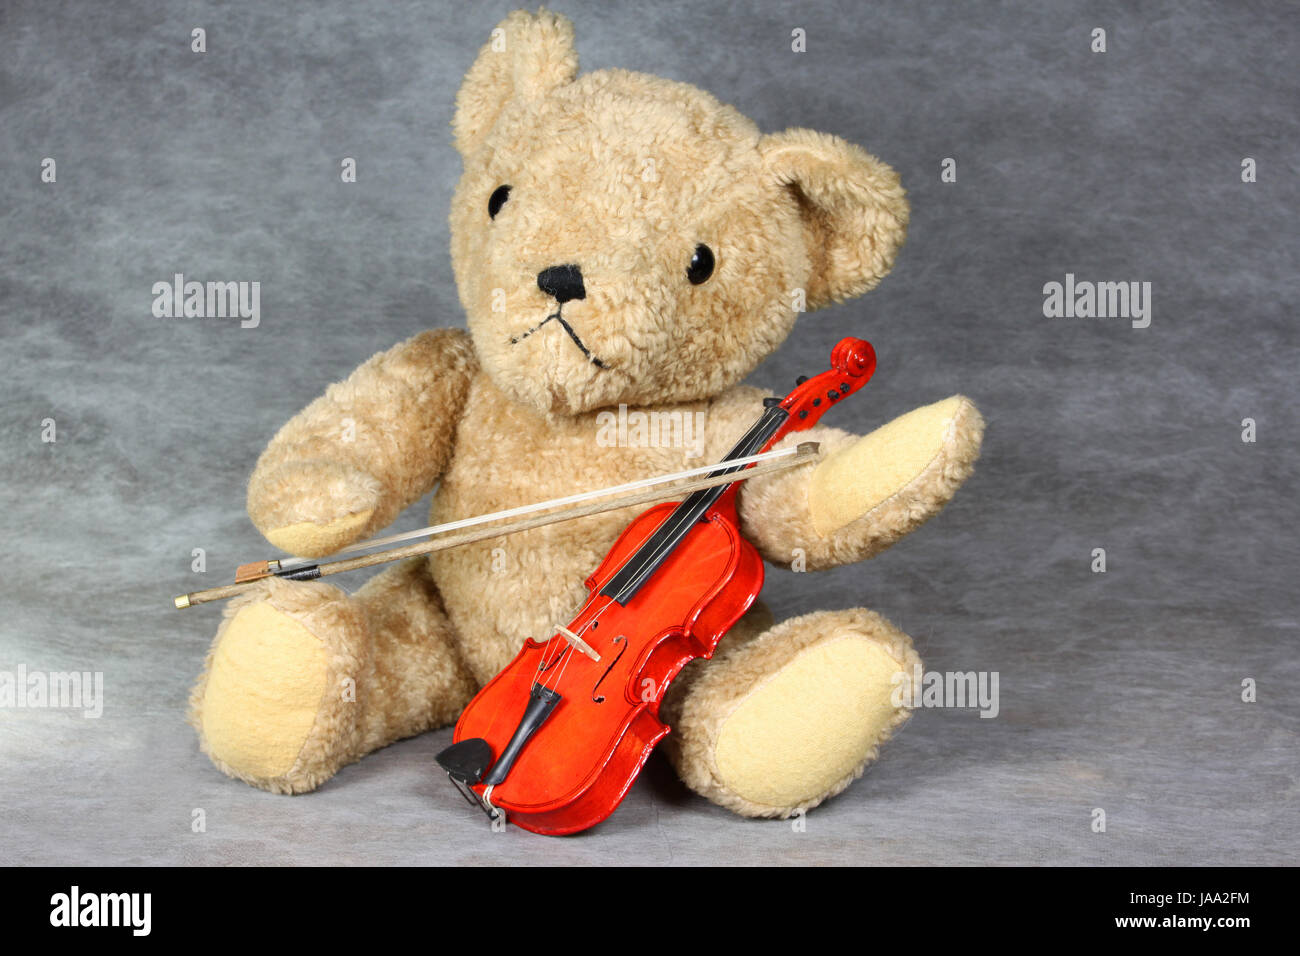 make music, toy, teddy, teddy bear, teddybear, violin, comforter, pictogram, Stock Photo